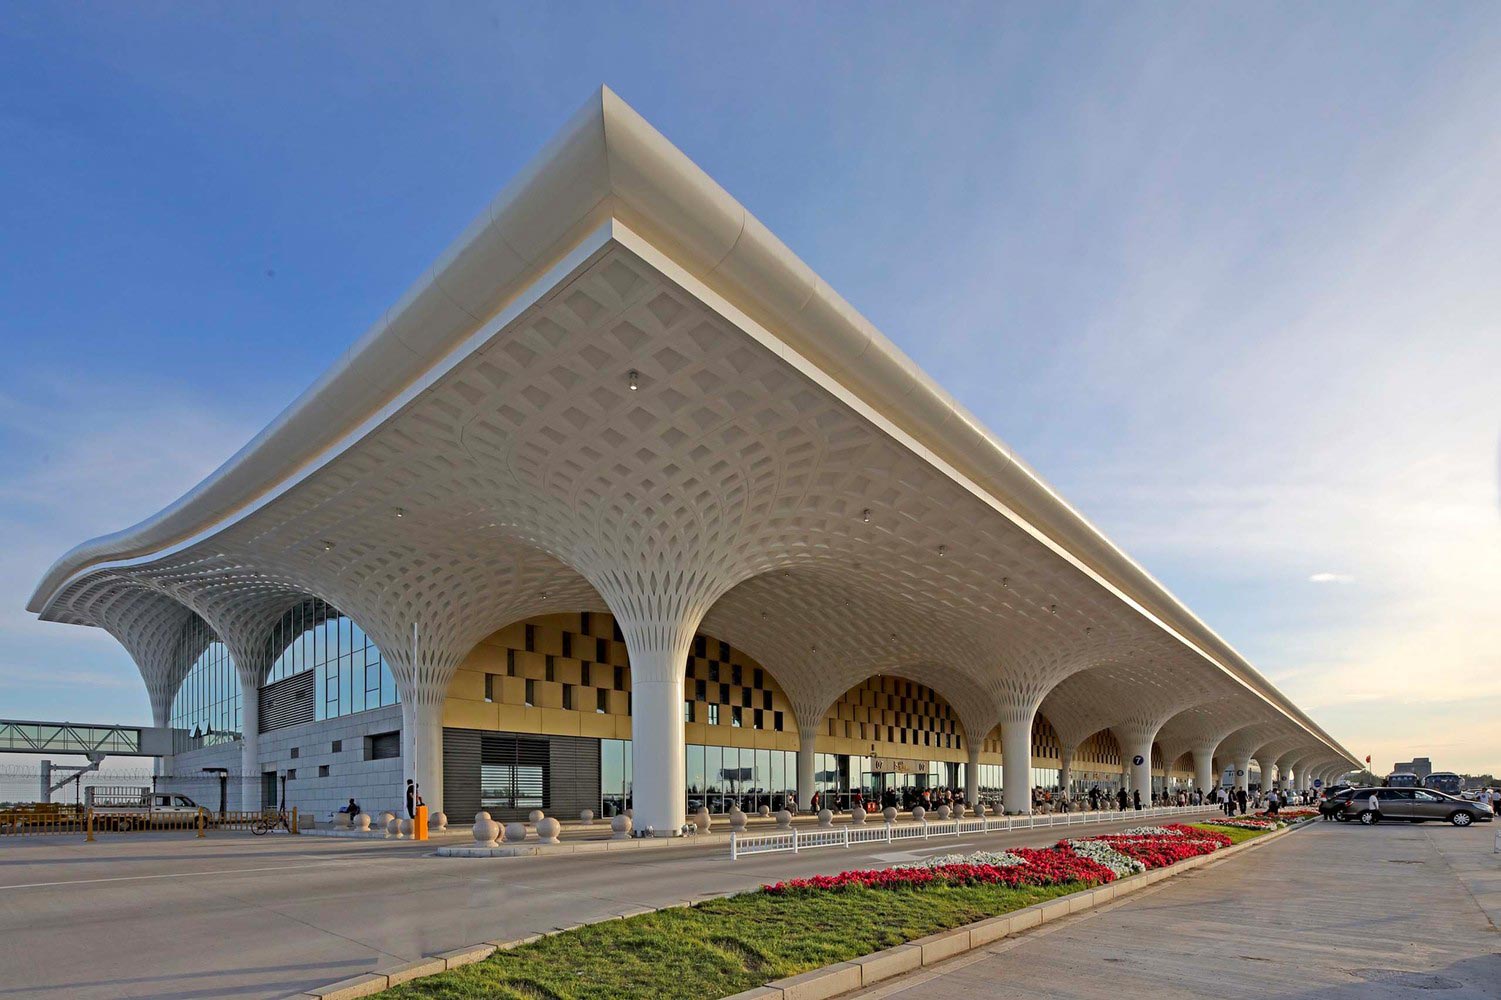 Hulunbuir Hailar Airport